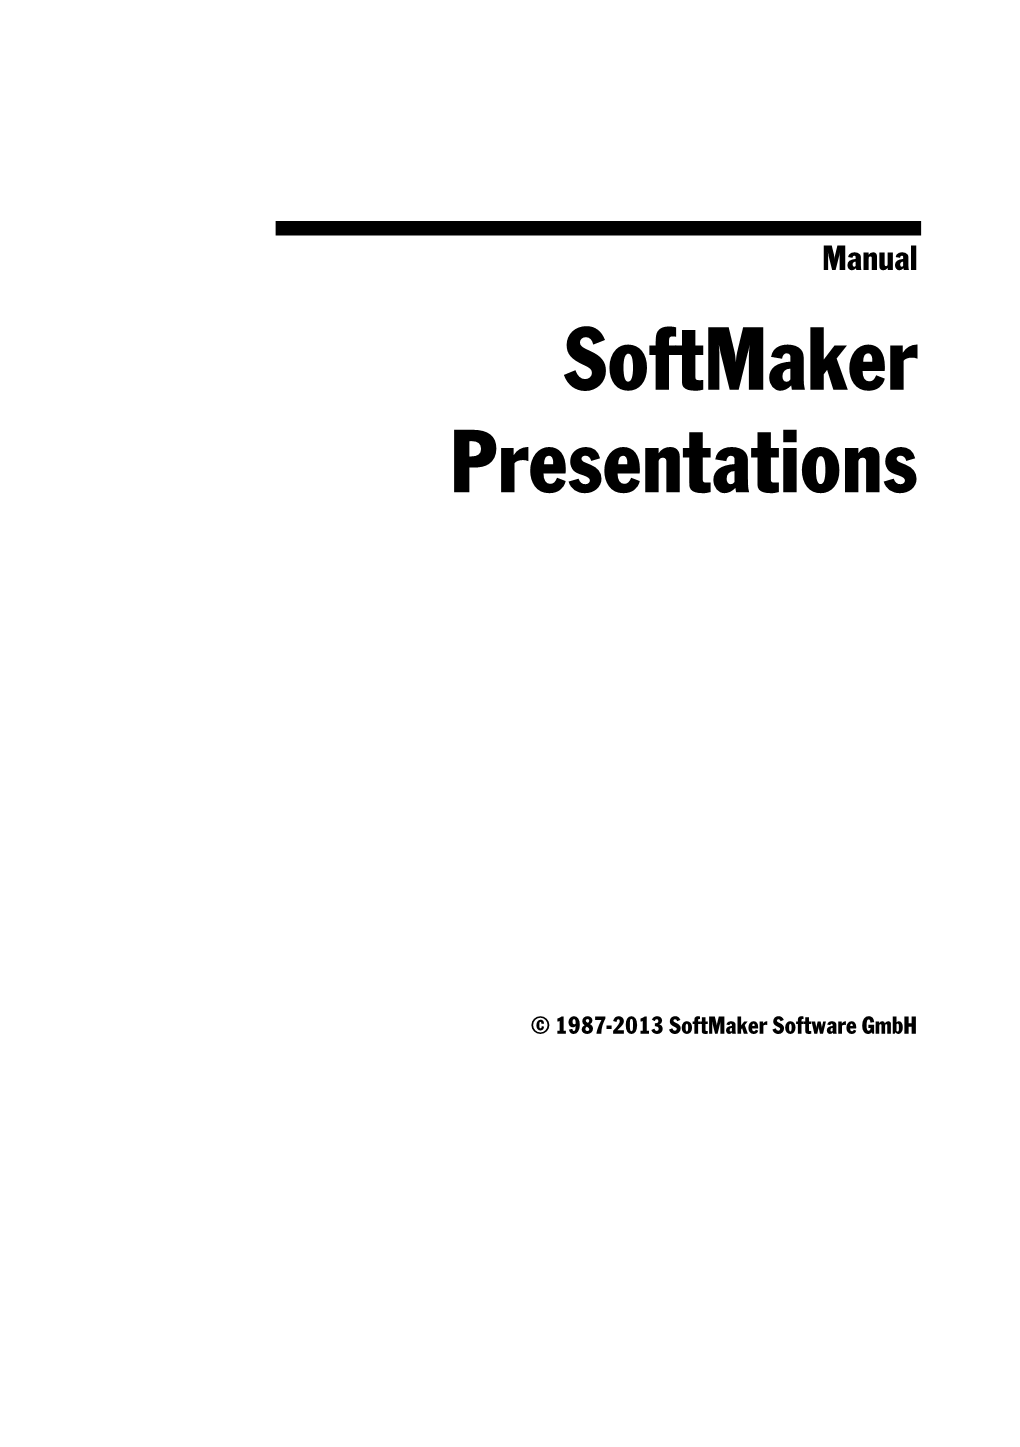 Manual Softmaker Presentations